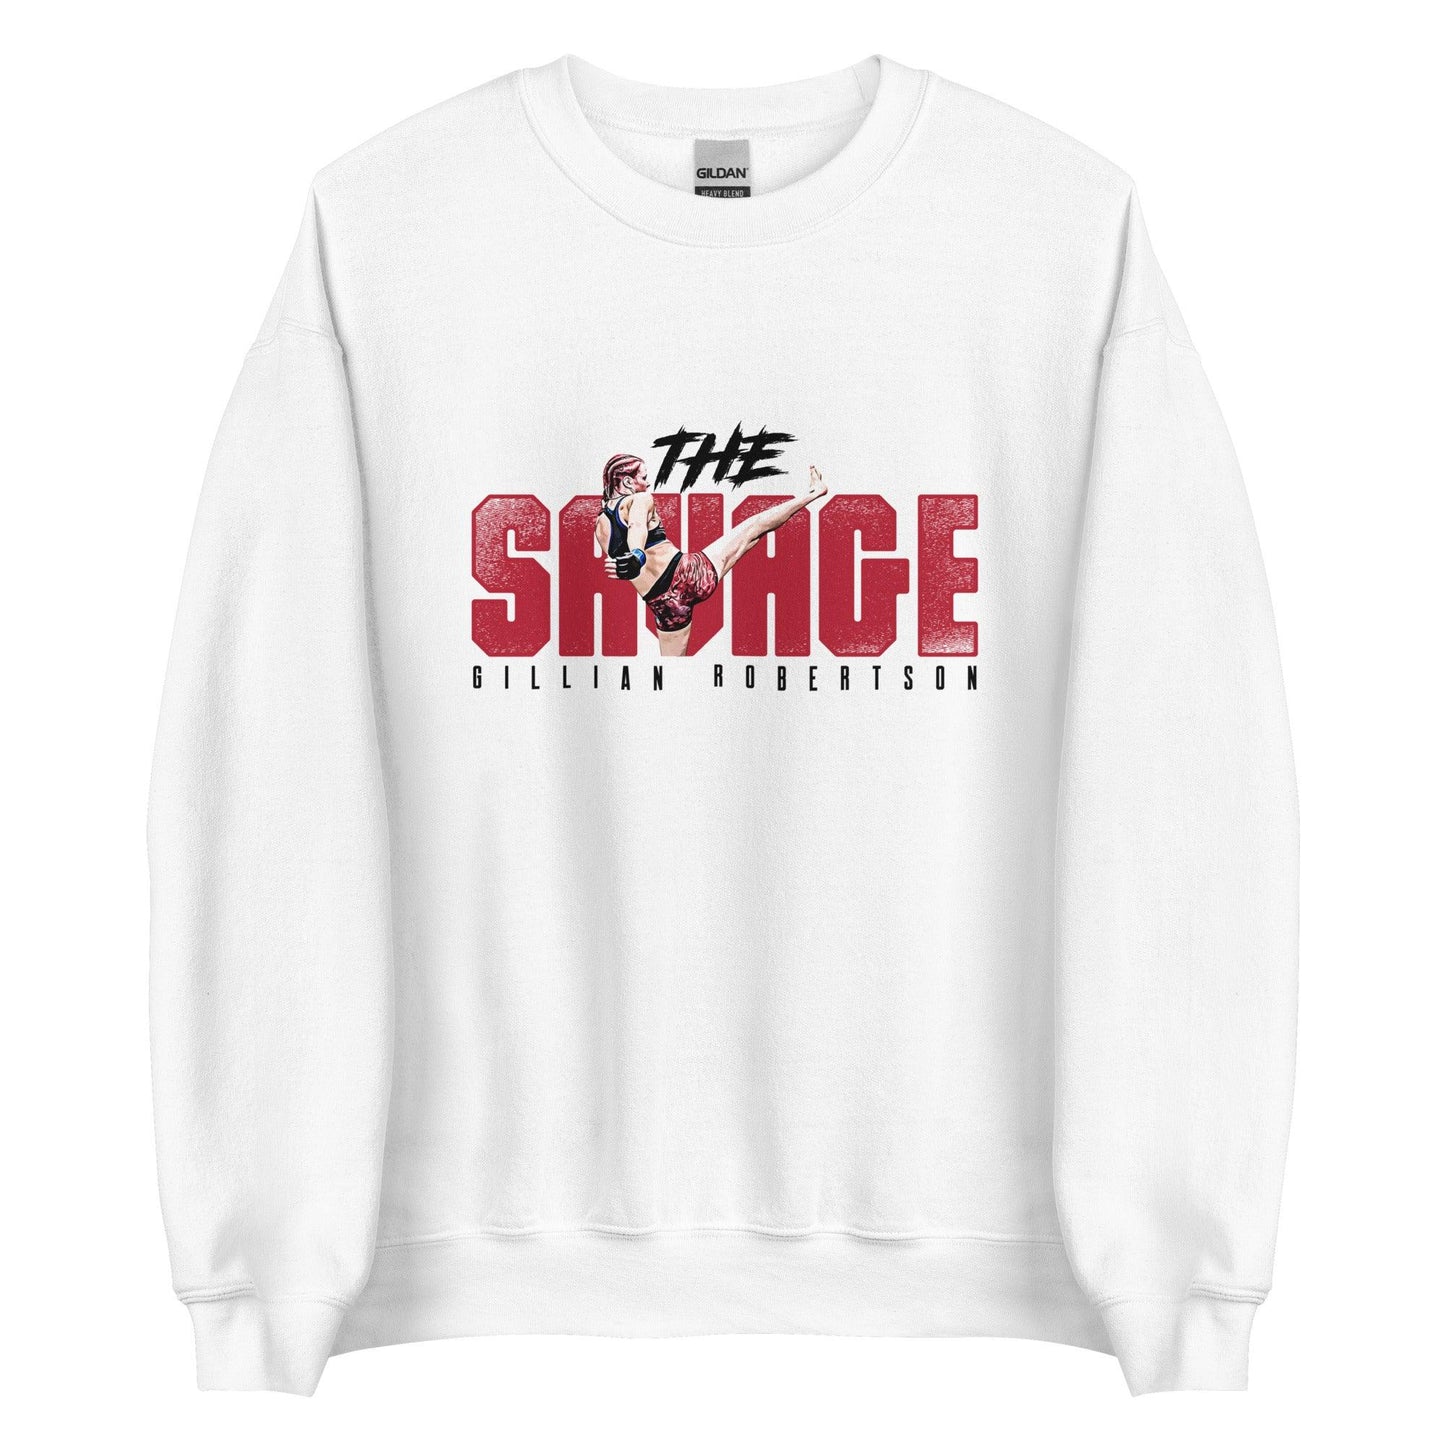 Gillian Robertson "The Savage" Sweatshirt - Fan Arch